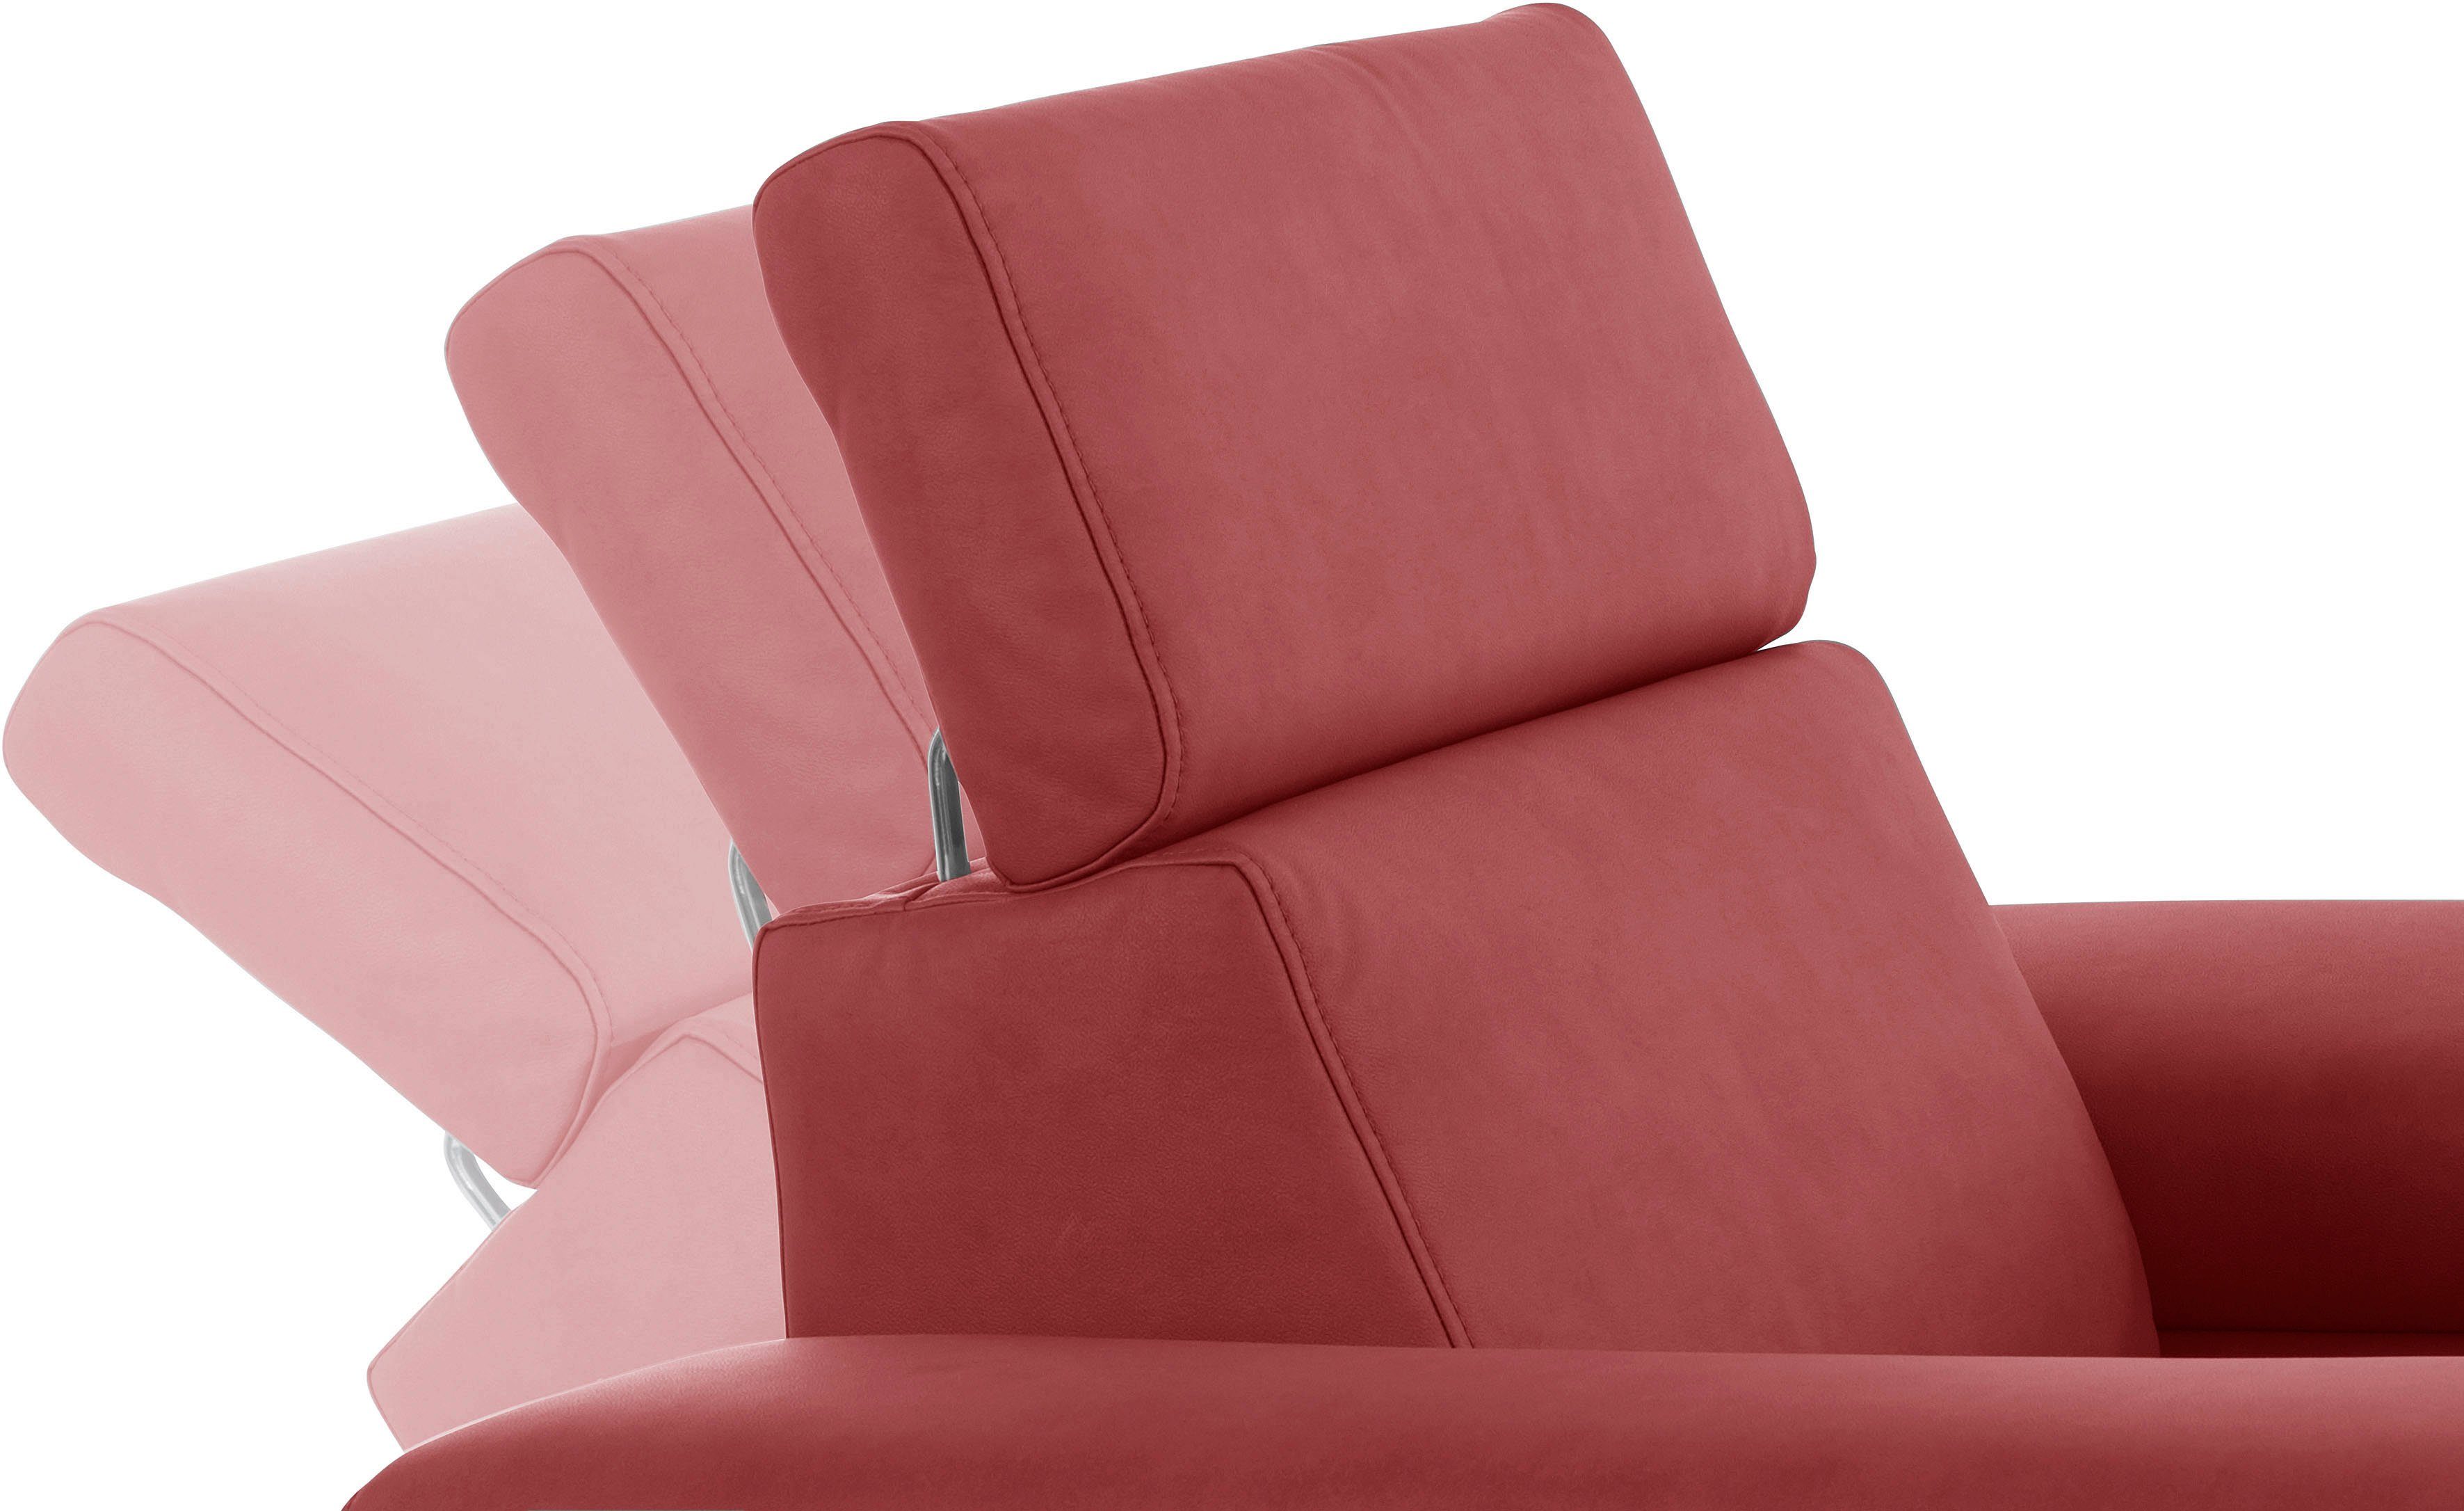 Places of Style Trapino in Rückenverstellung, Lederoptik Luxus-Microfaser Luxus, mit wahlweise Sessel